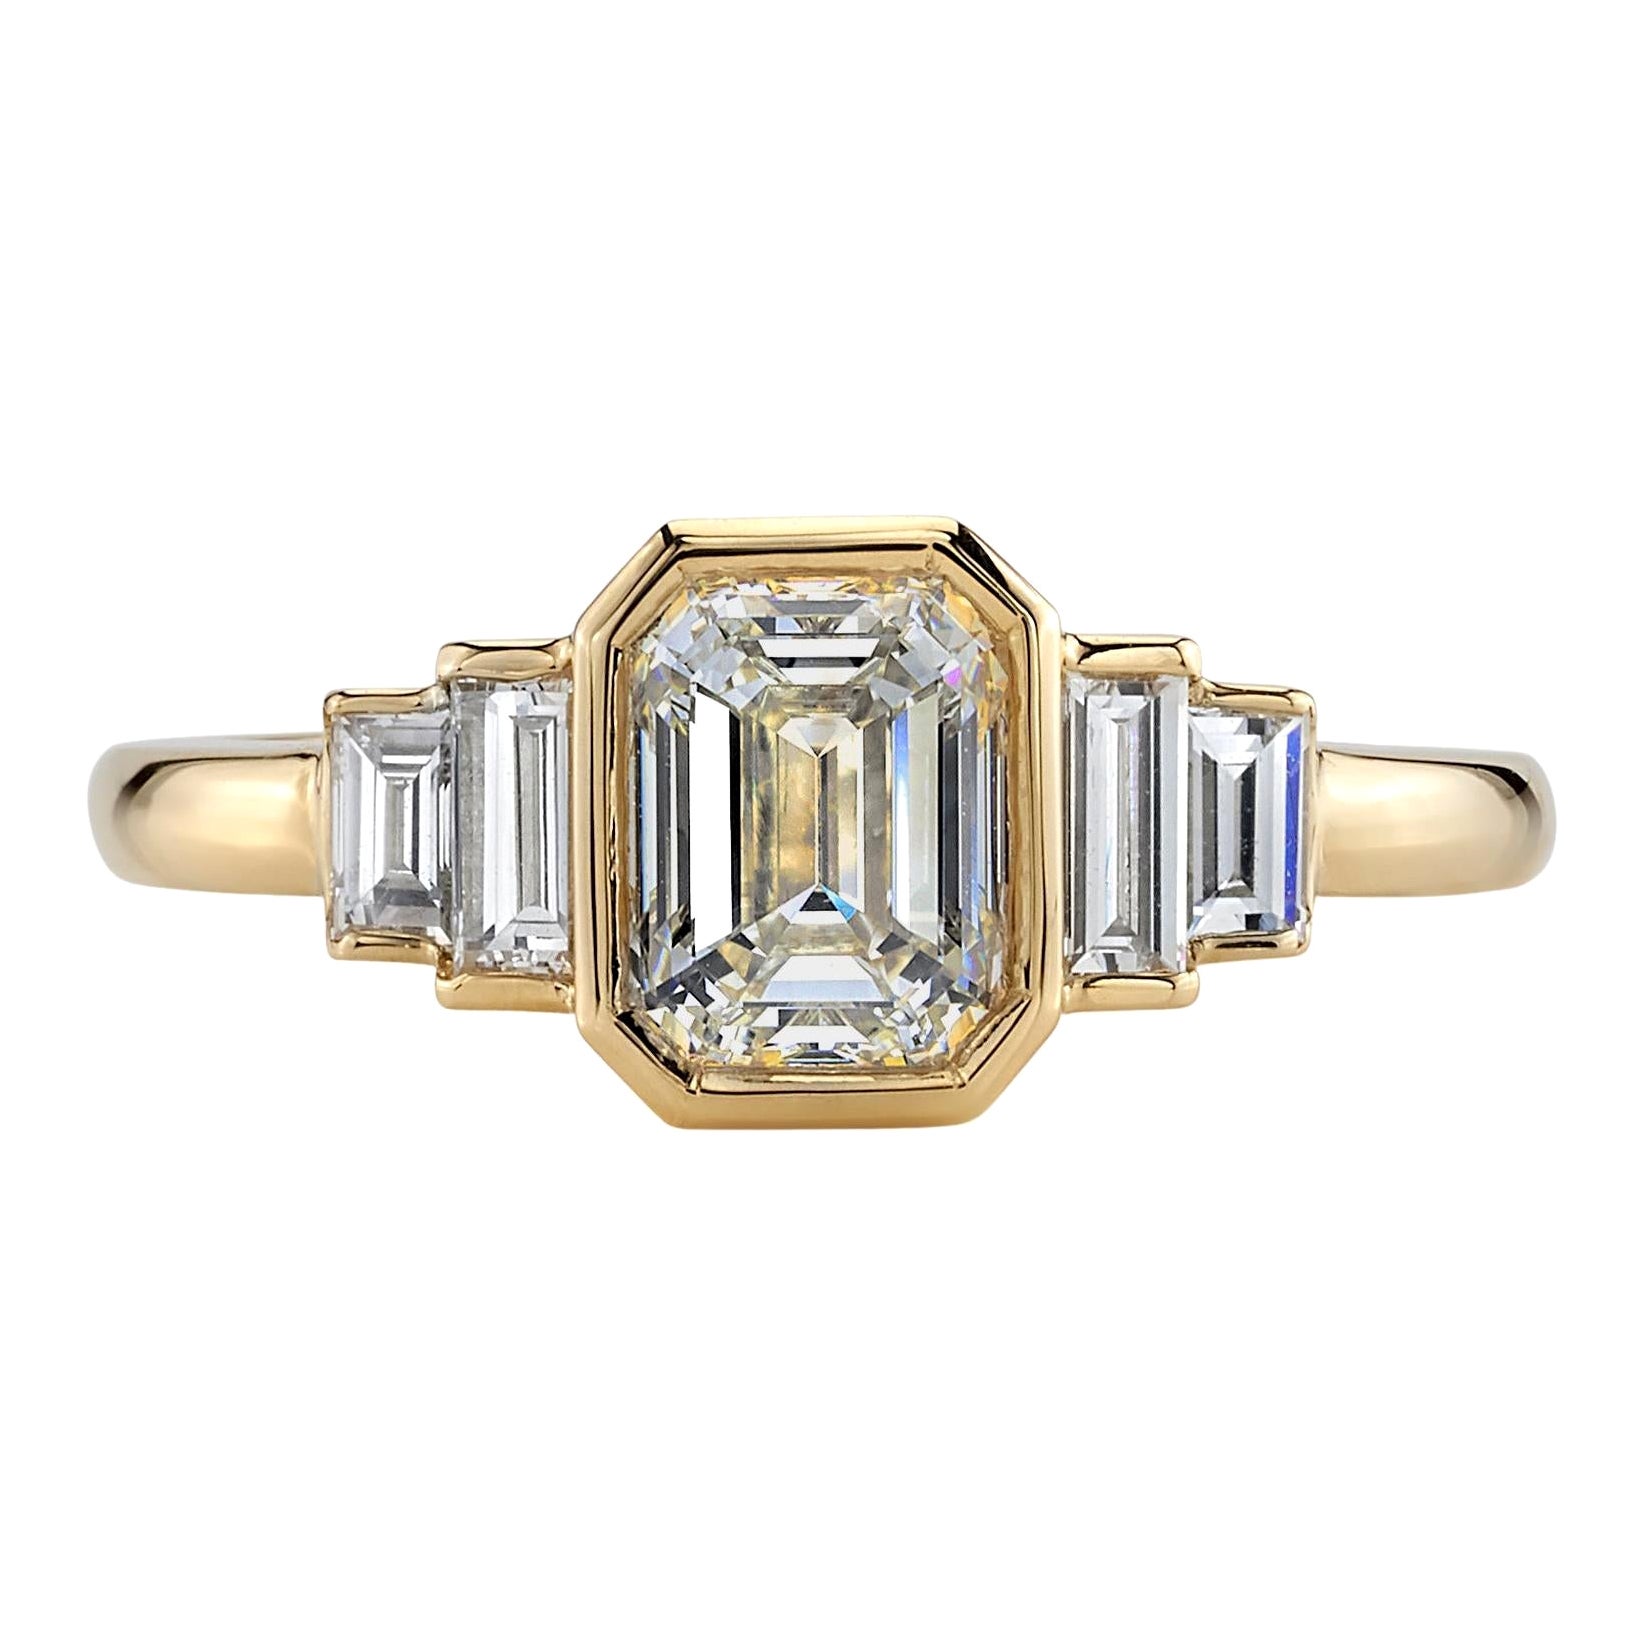 Handcrafted Caroline Emerald Cut Diamond Ring by Single Stone